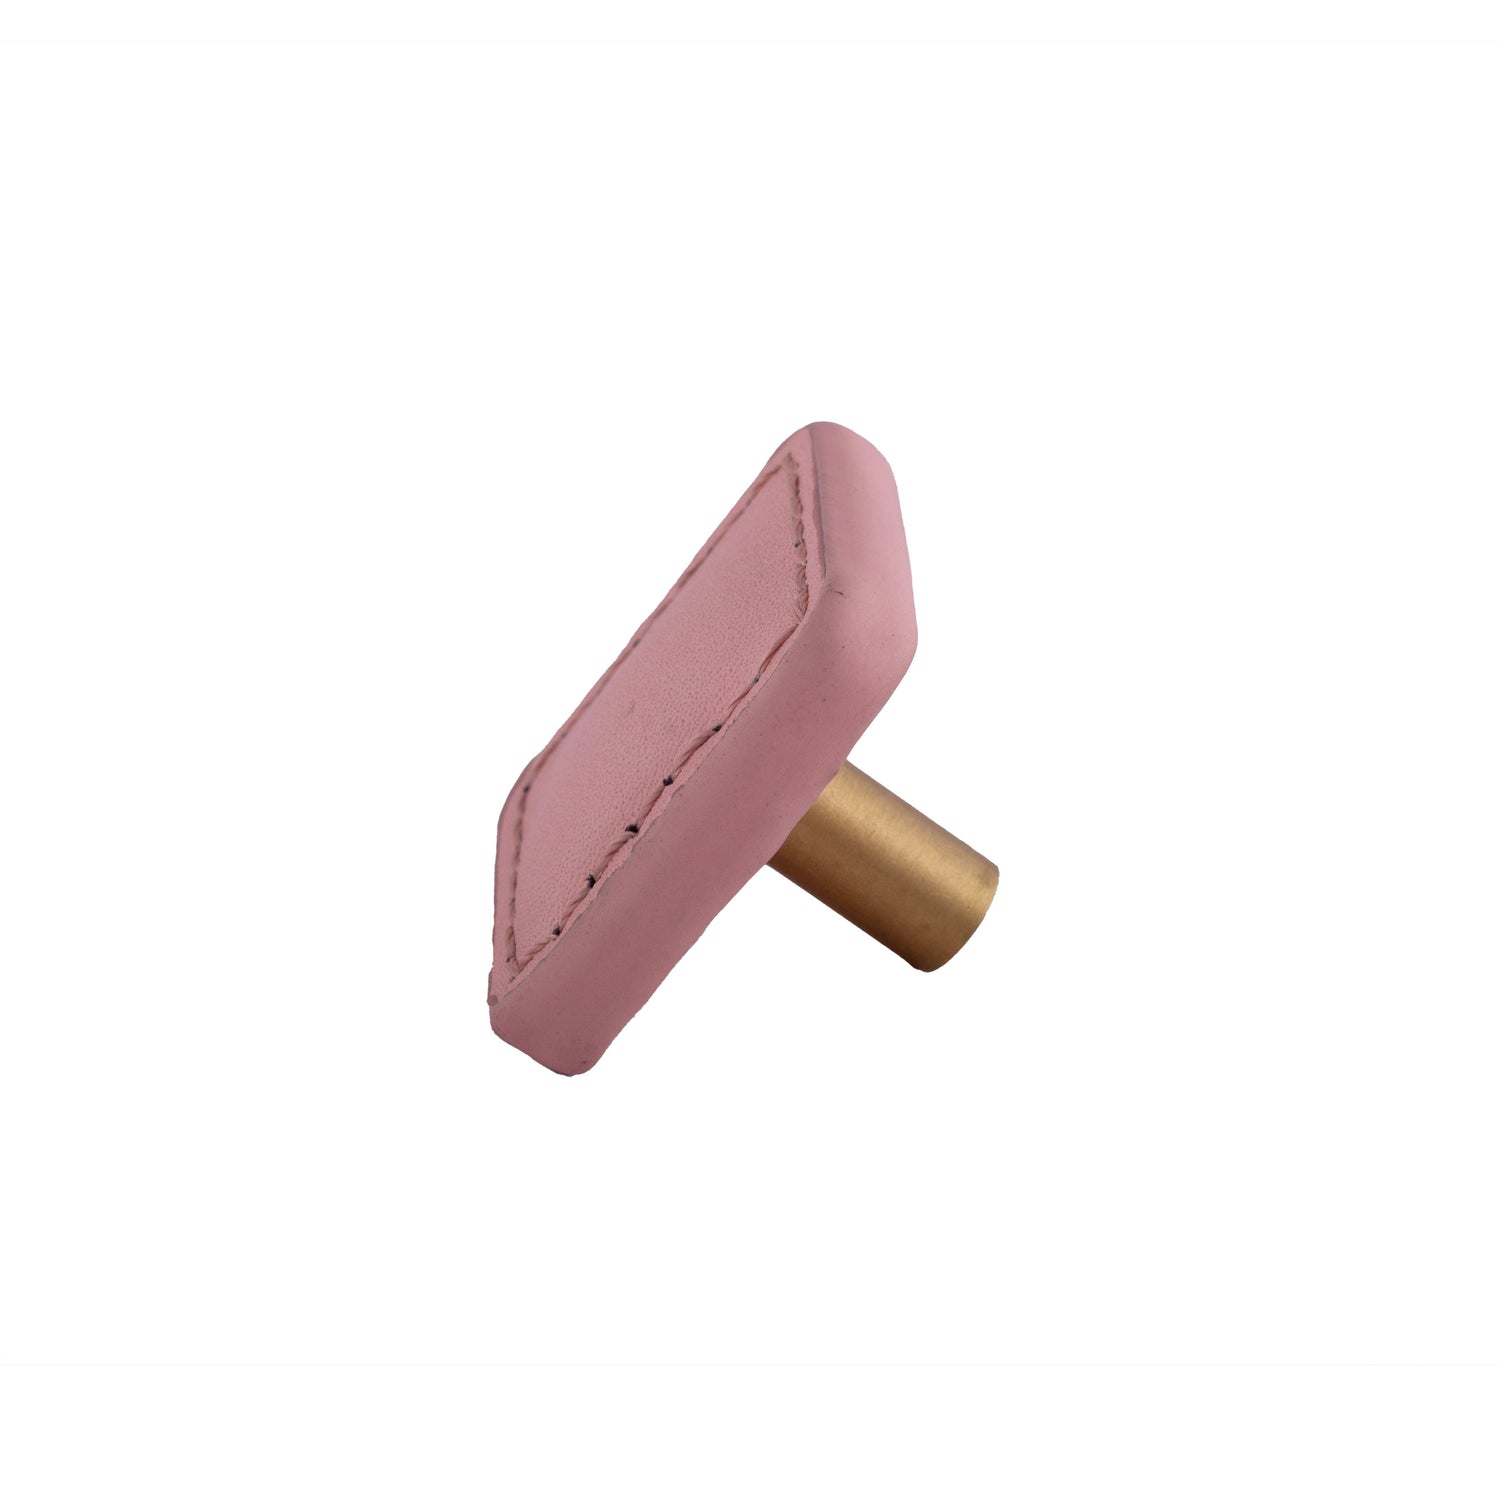 Sofia Square knob Knob 33mm / Pink / Leather - M A N T A R A